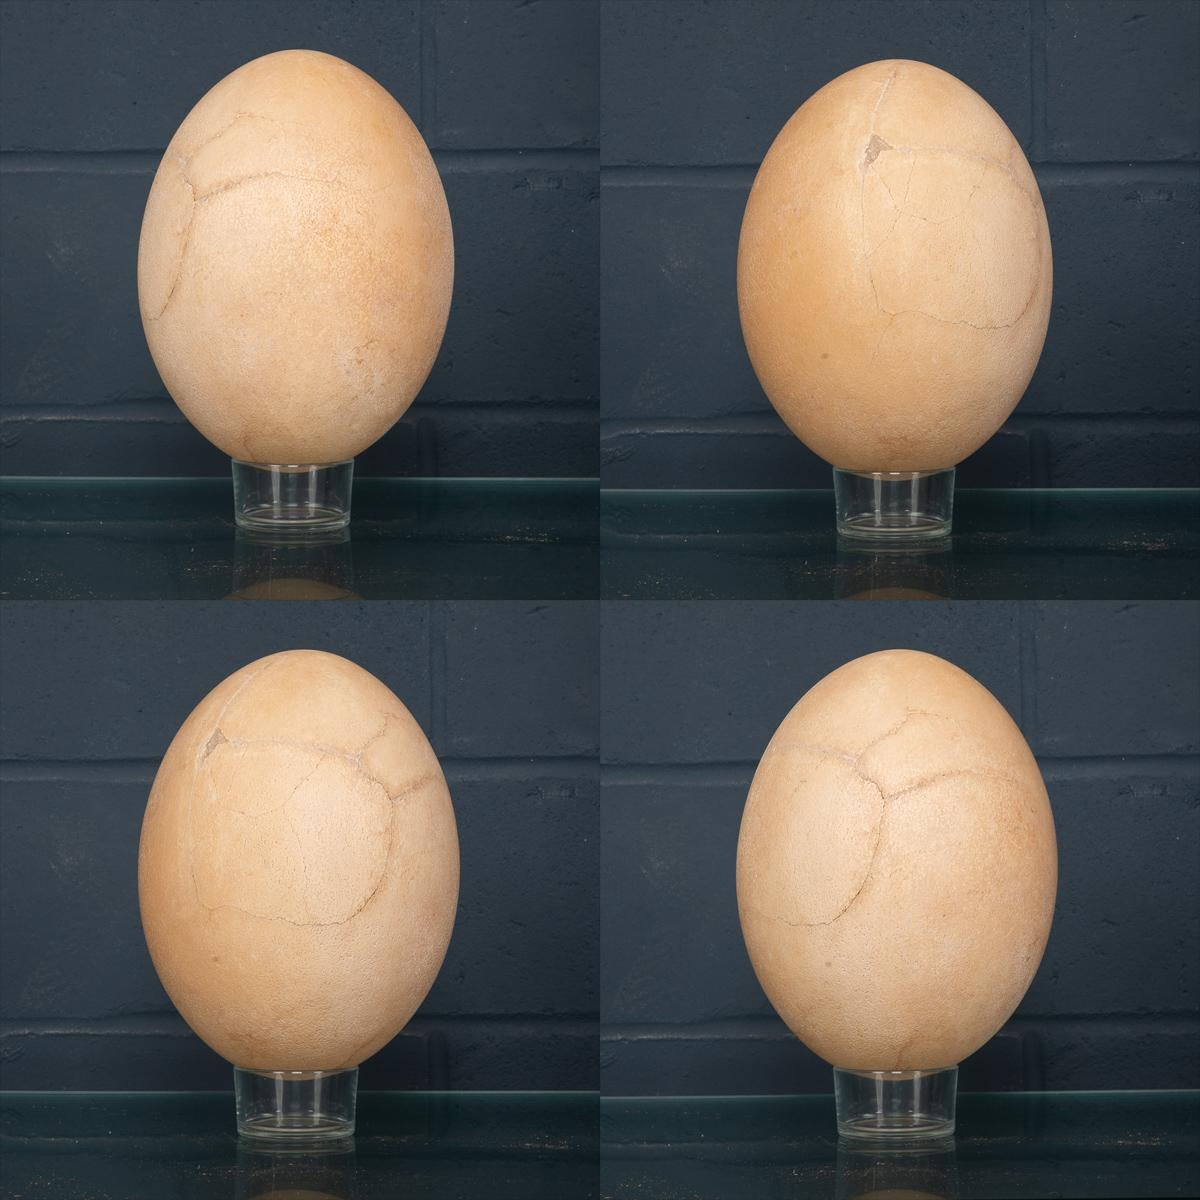 bird egg comparison